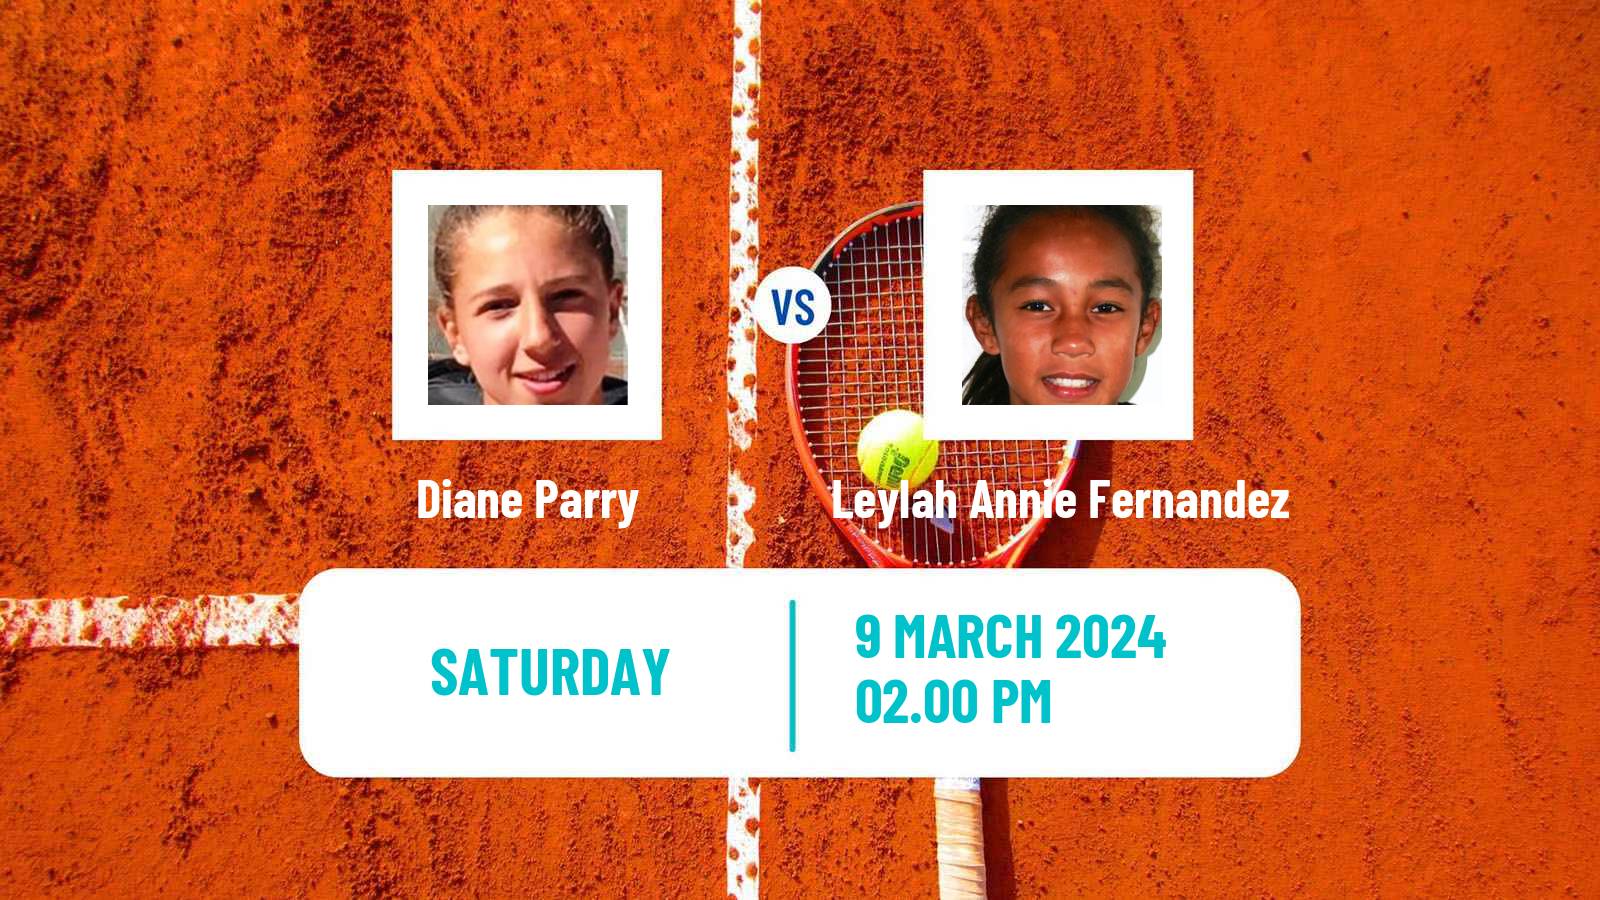 Tennis WTA Indian Wells Diane Parry - Leylah Annie Fernandez